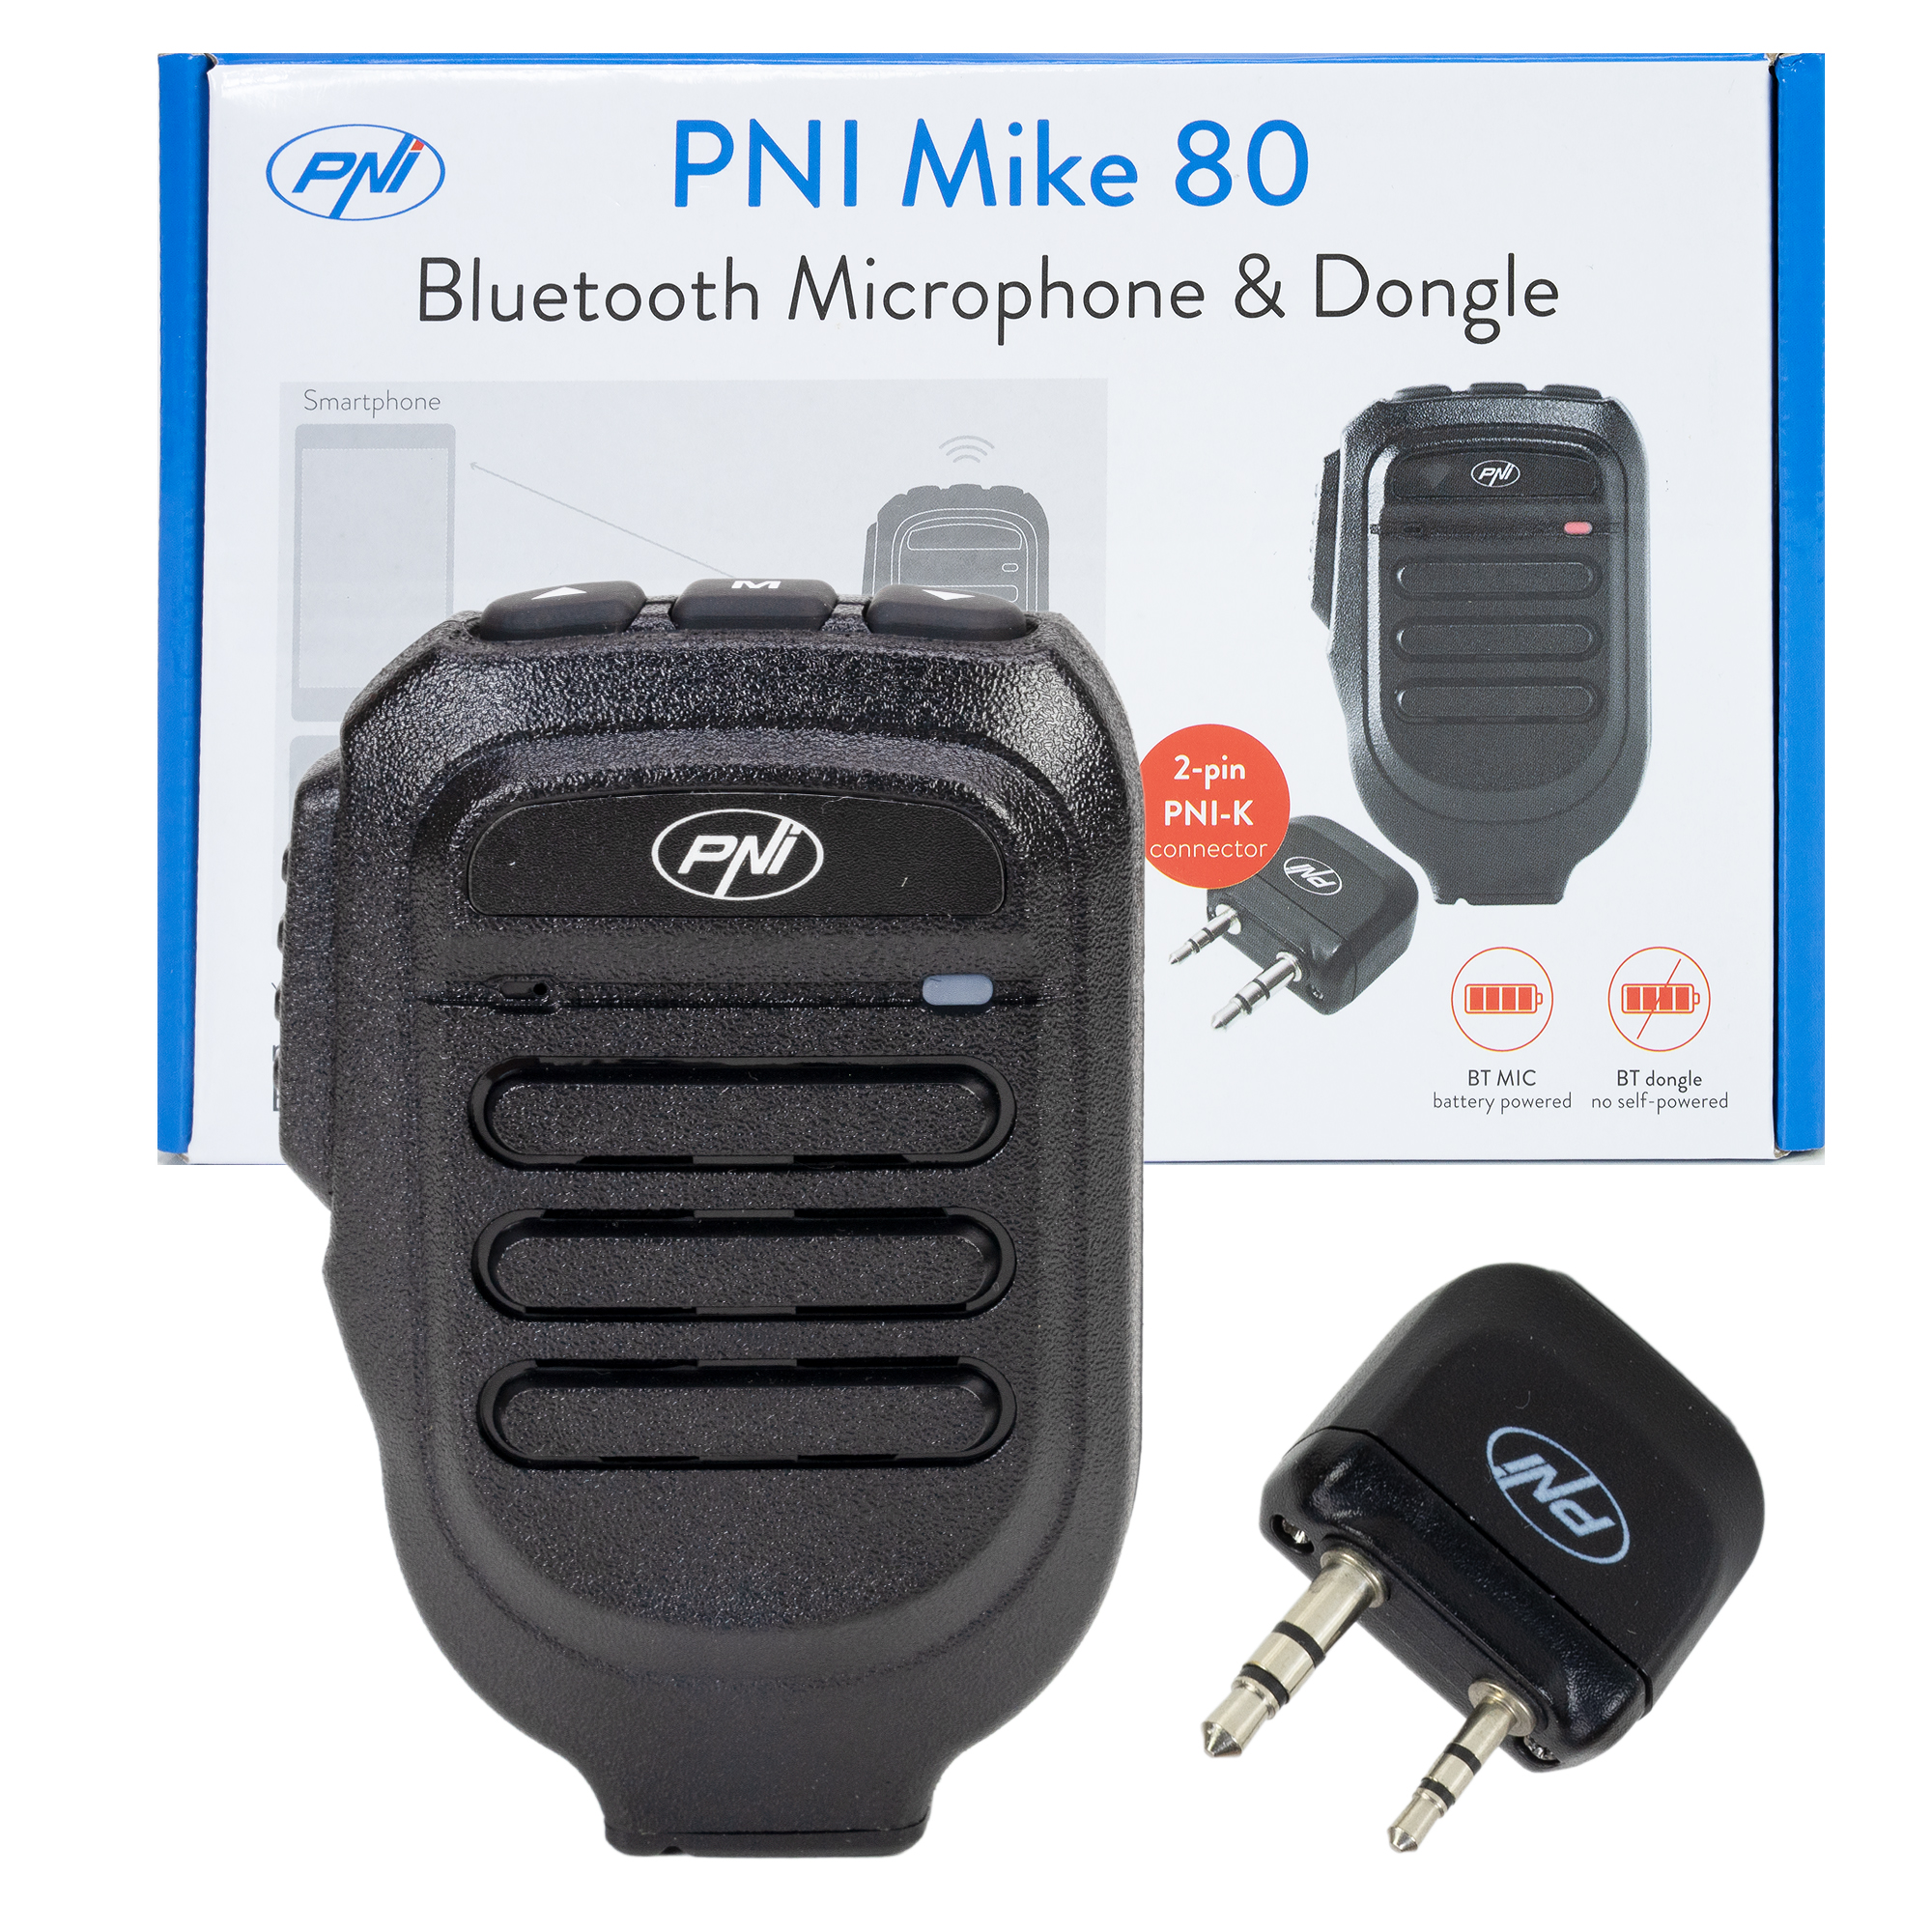 PNI-MIKE80 Drahtloses Mikrofon und Dongle mit Bluetooth - Bild 6